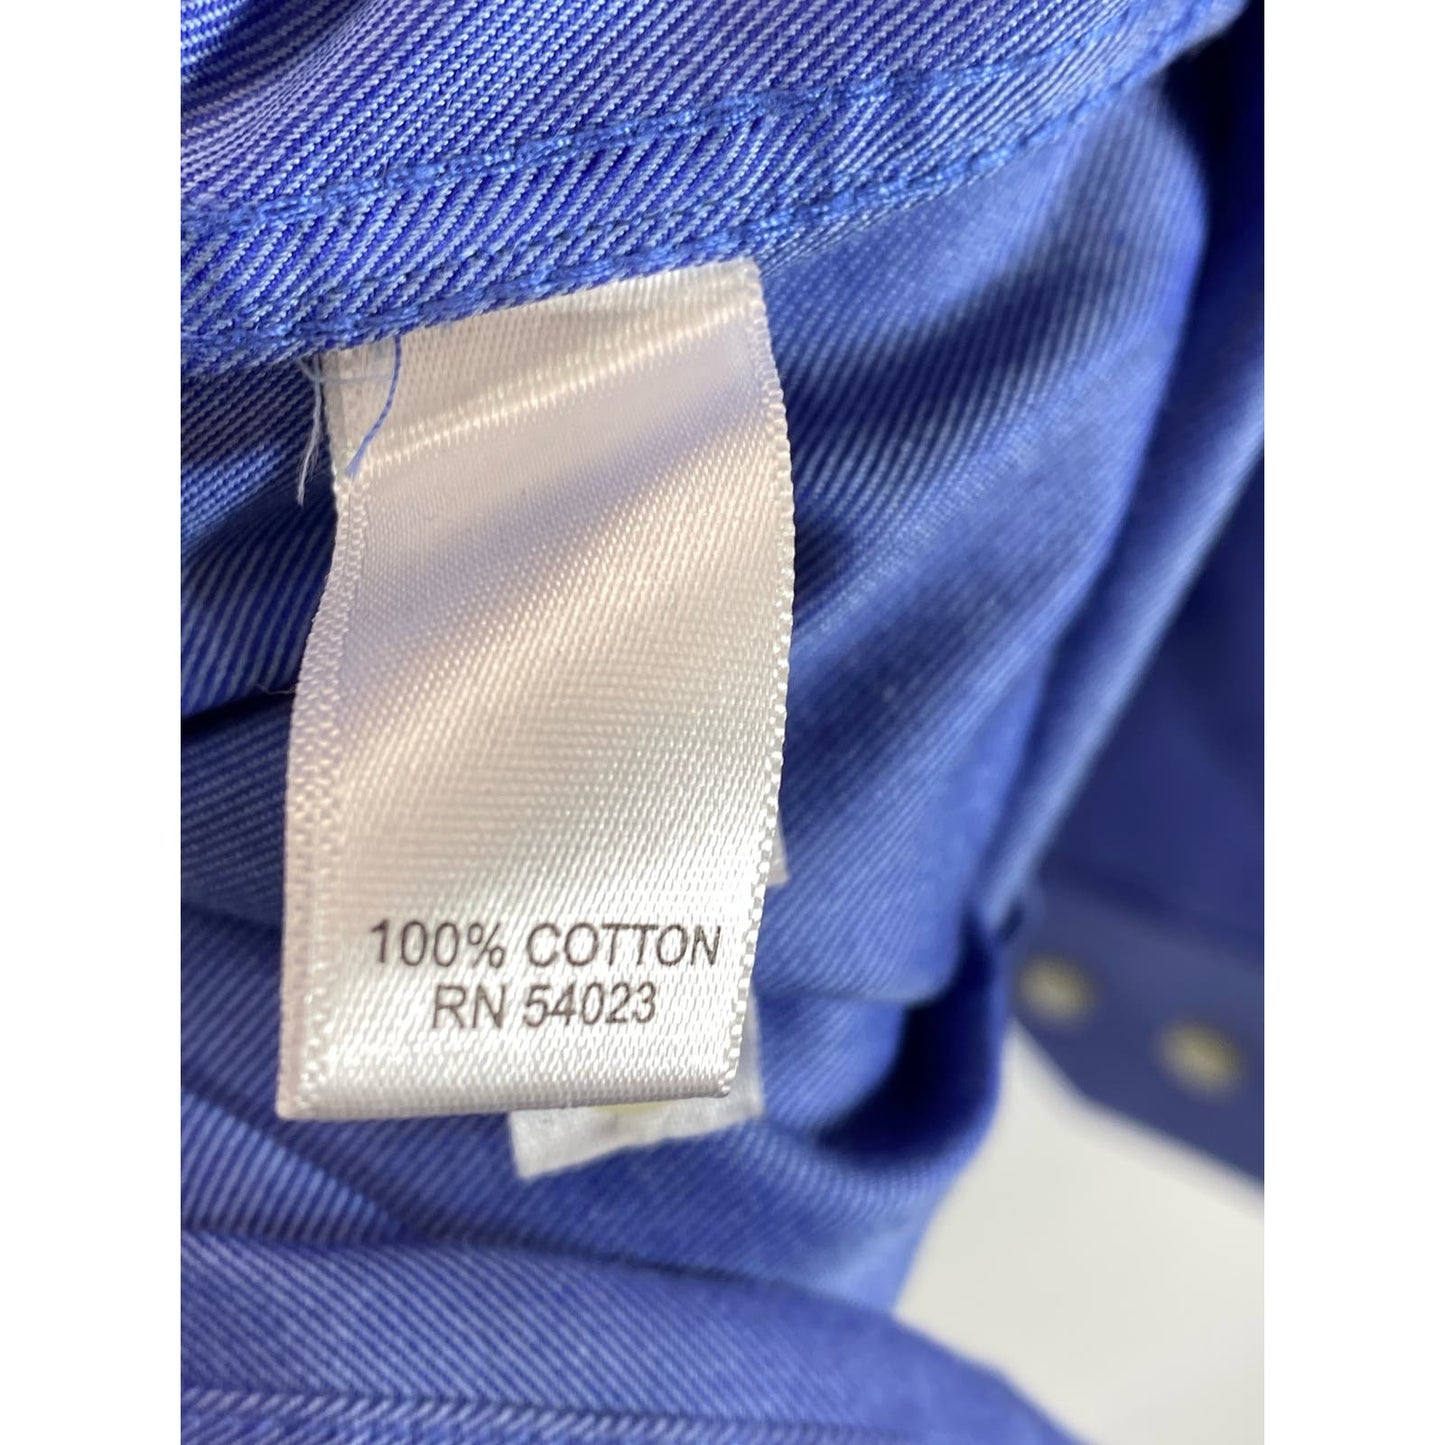 BANANA REPUBLIC Men's Blue Non-Iron Classic-Fit Button-Up Long Sleeve Shirt SZ L